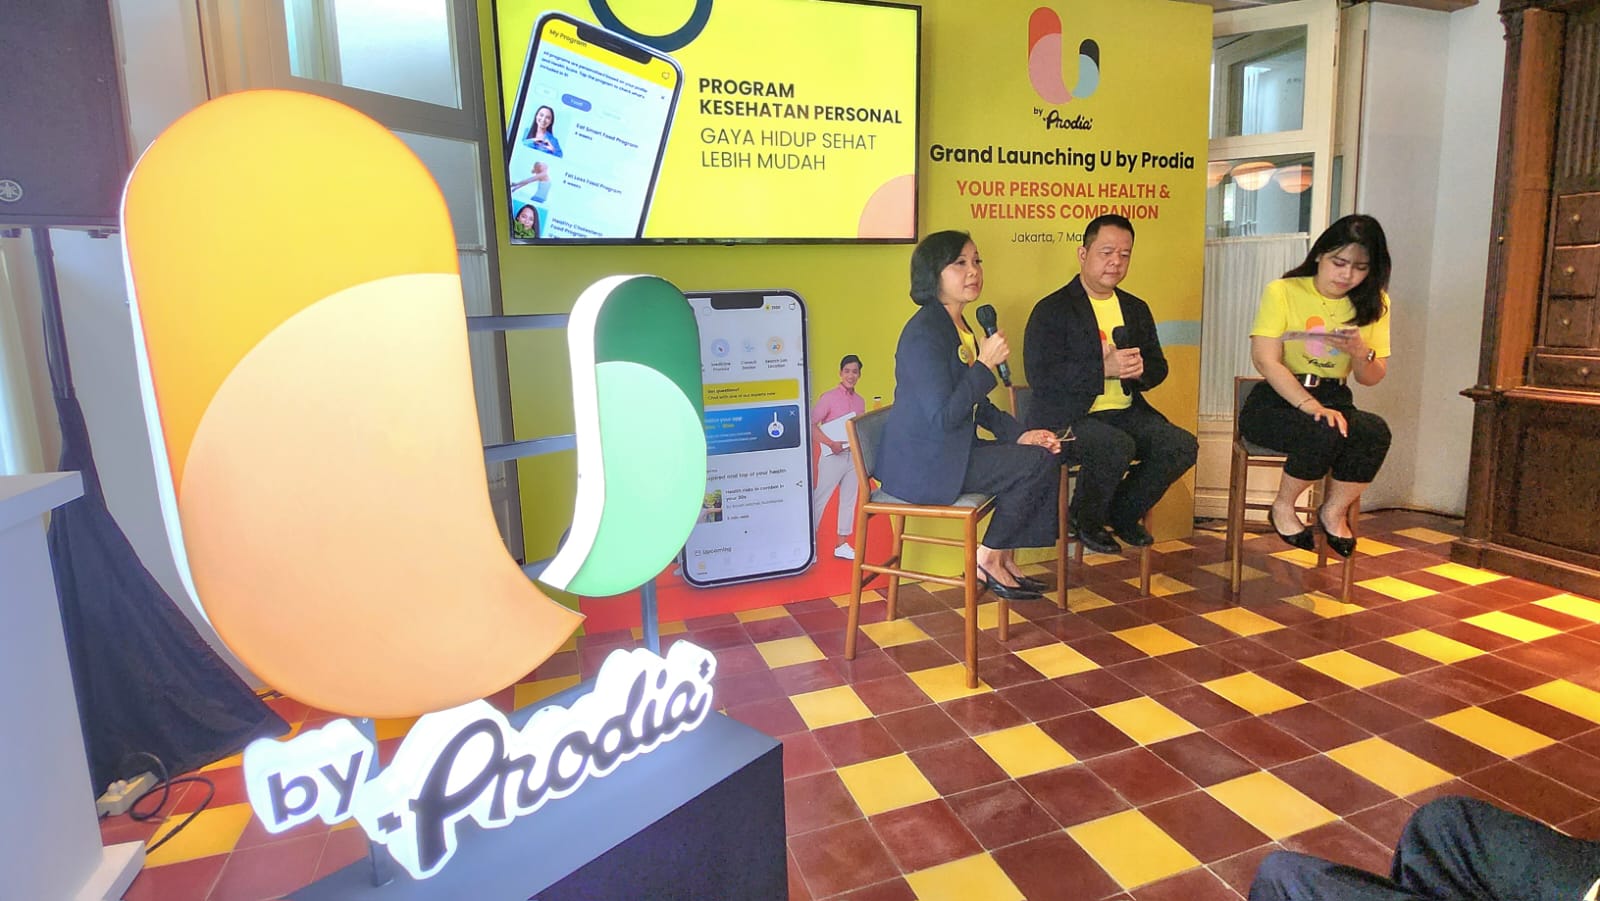 Anak Usaha Prodia, PT Prodia Digital Indonesia, Luncurkan Aplikasi Kesehatan "U by Prodia" Personalized Health & Wellness